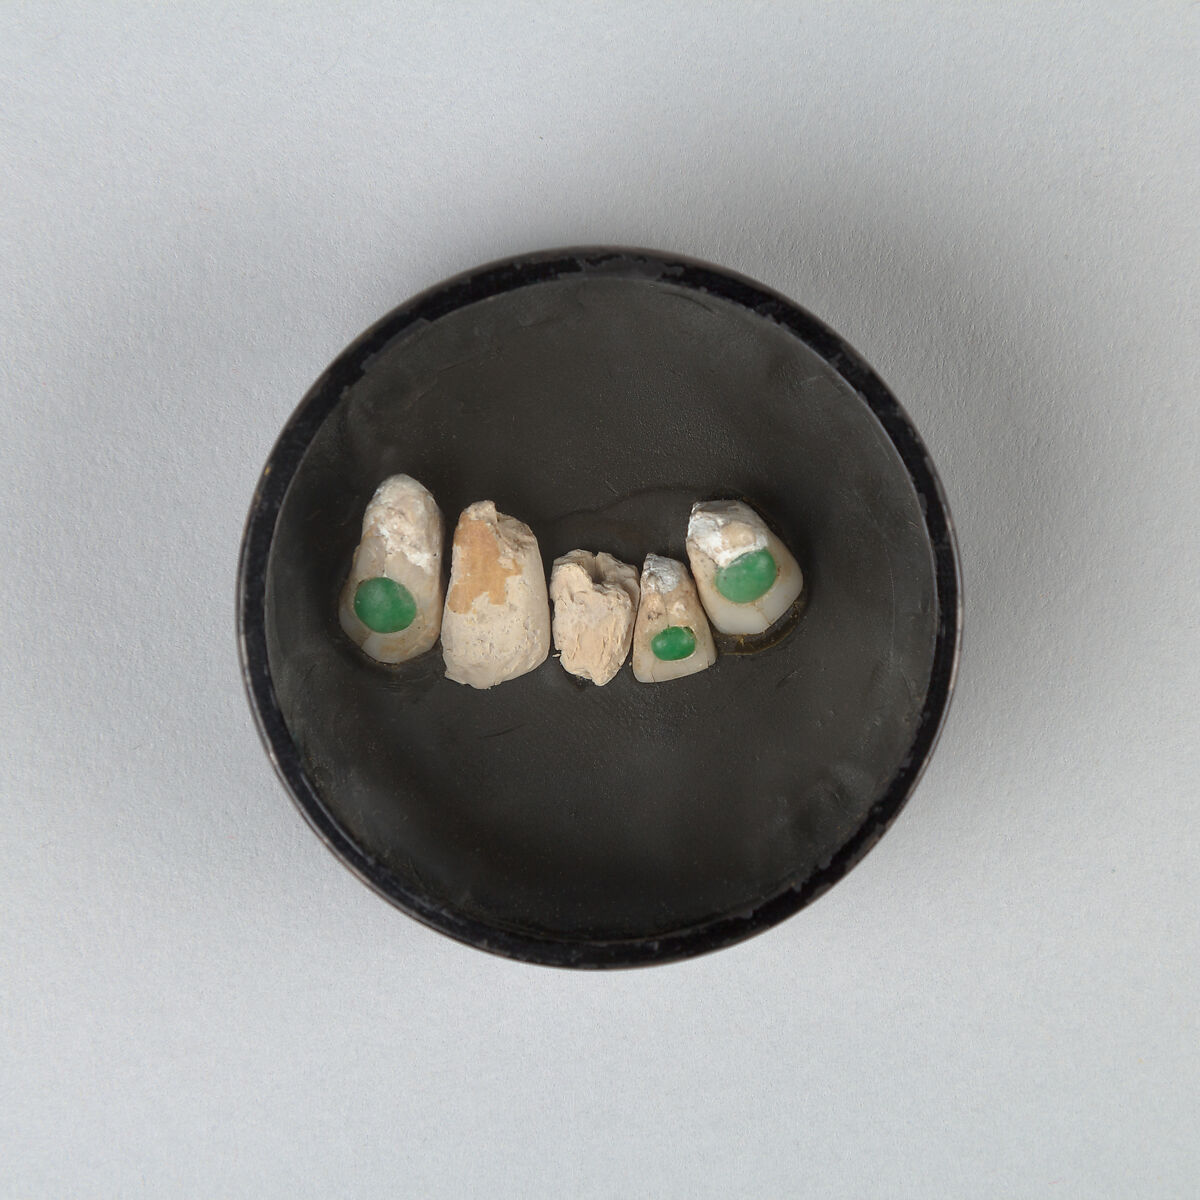 Human tooth inlaid with jadeite, Jadeite, pea-green, Mexico 